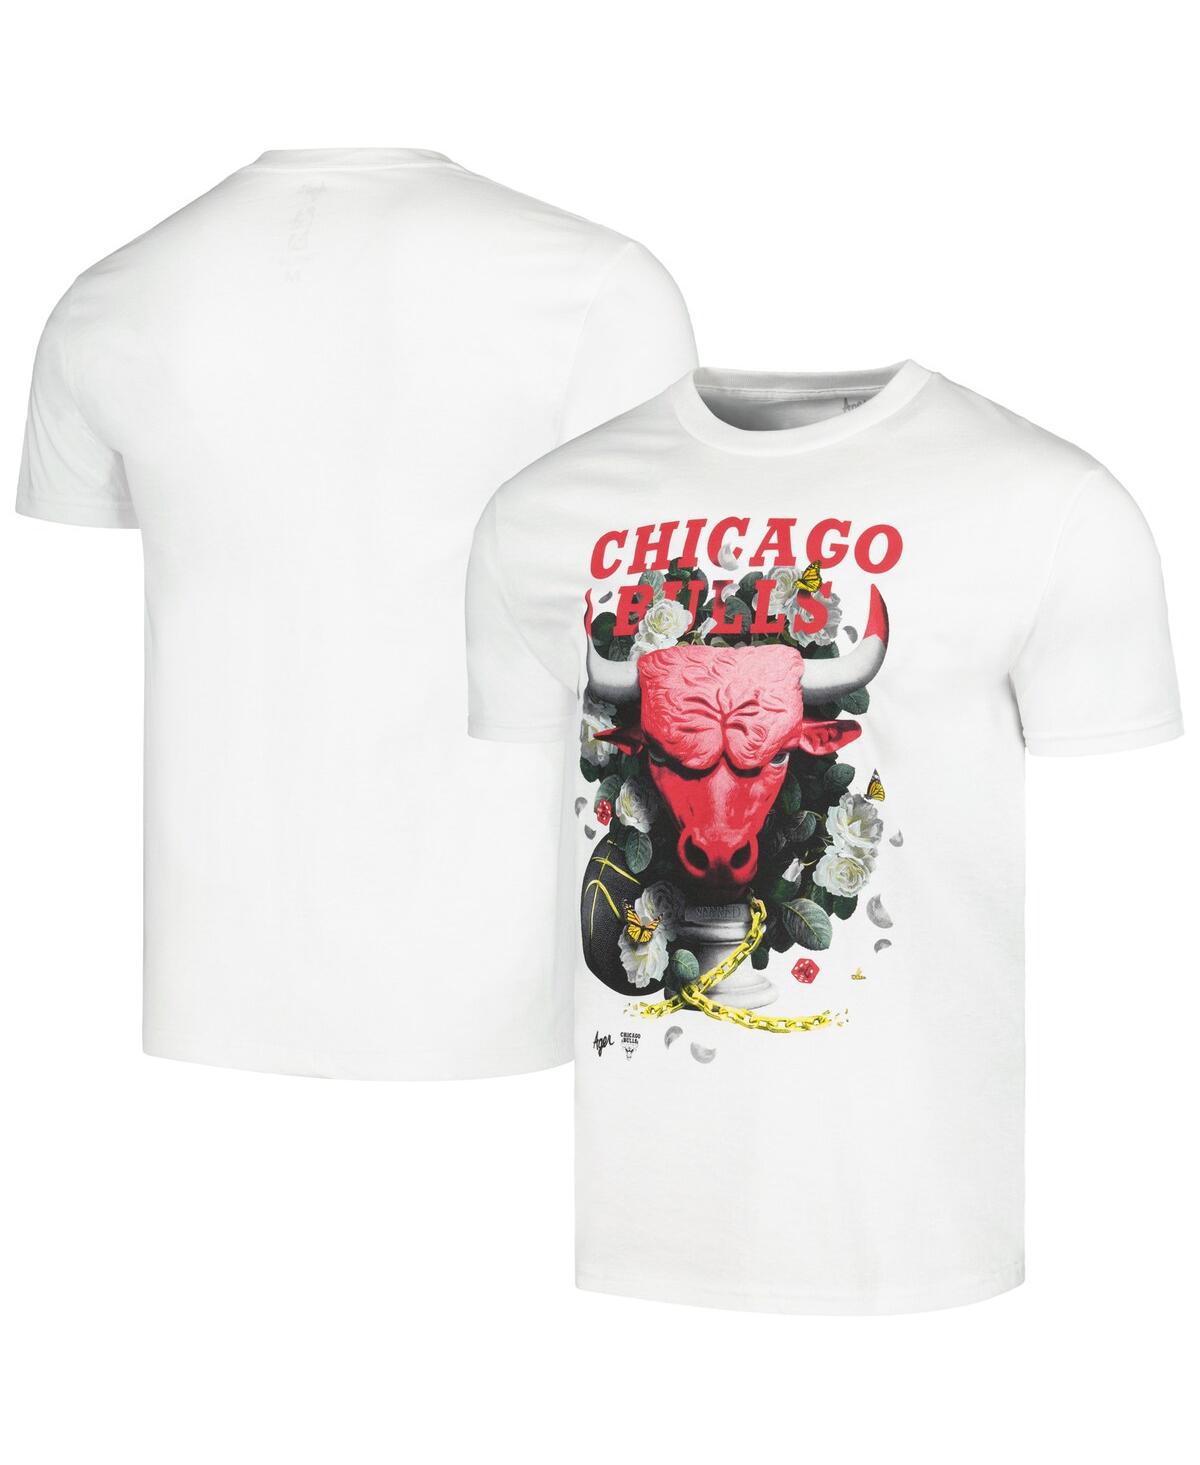 Men's and Women's Nba x Kathy AgerÂ White Chicago Bulls Identify Artist Series T-shirt - White